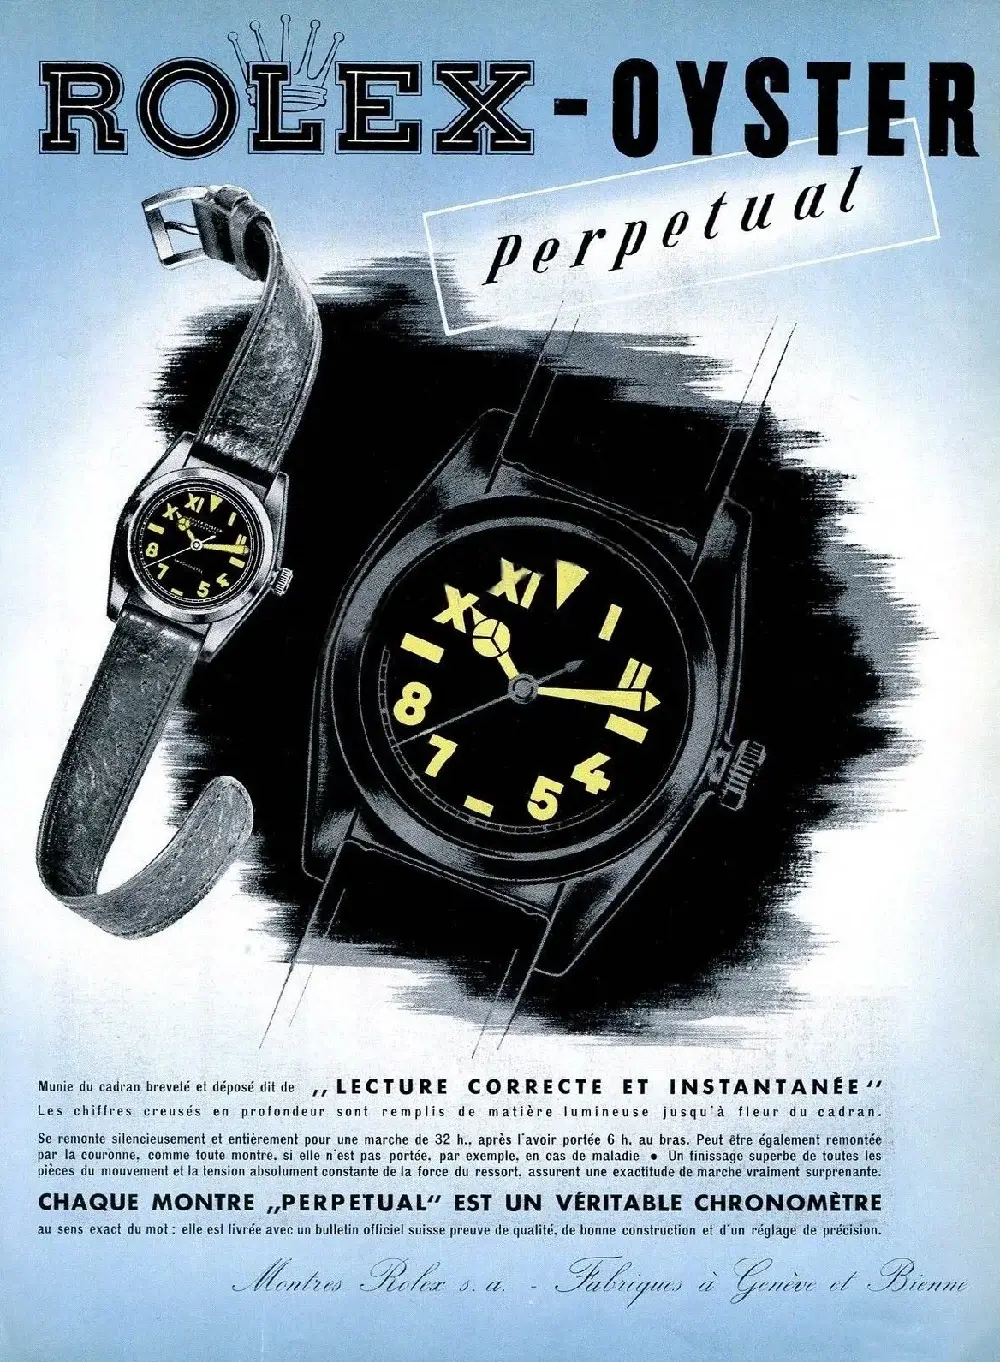 Quảng cáo đồng hồ Rolex Oyster Perpetual - Bubble Back